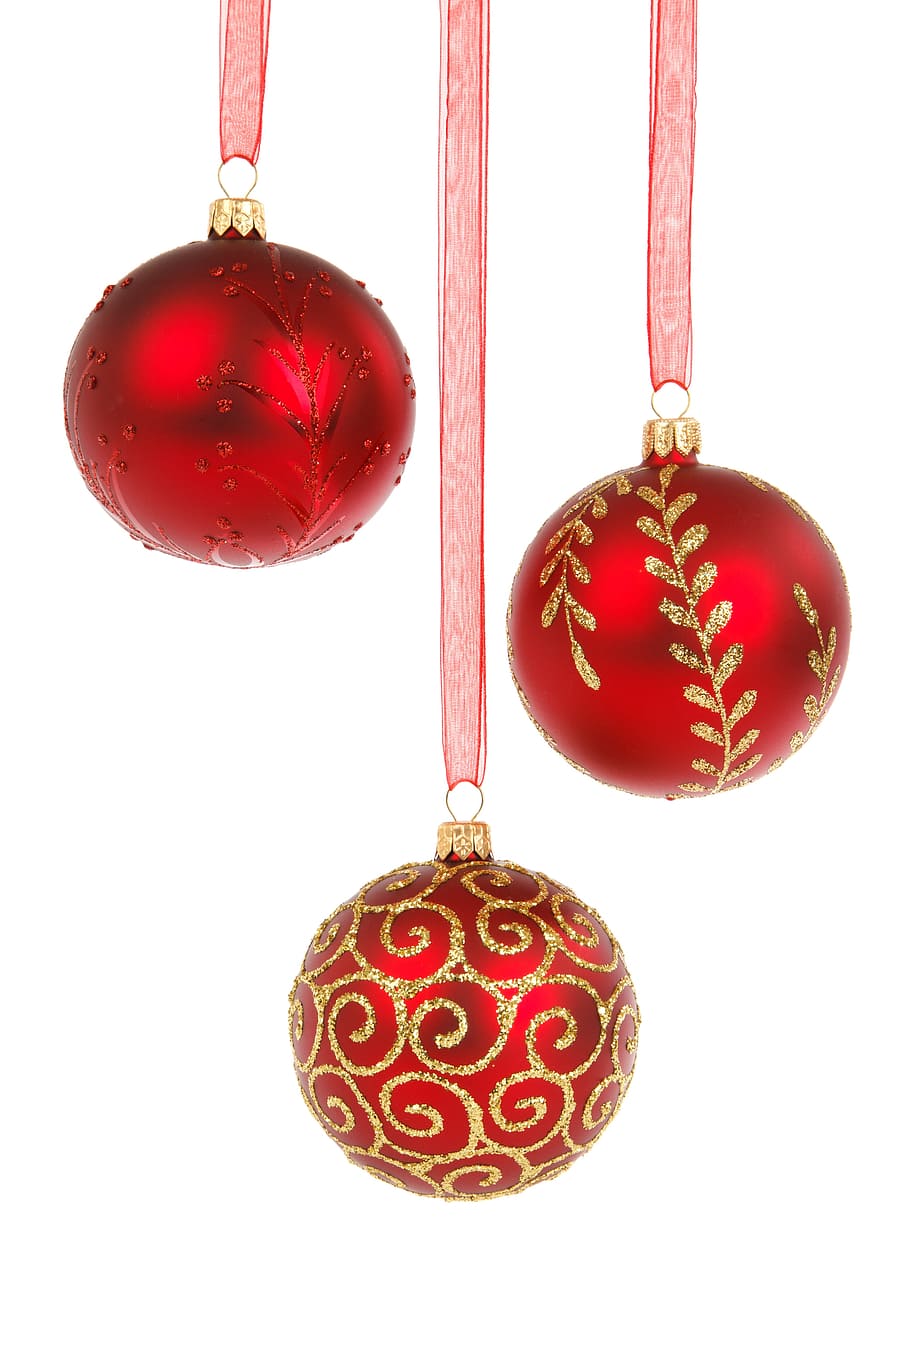 three red baubles, ball, balls, bauble, celebration, christmas, december, decor, decoration, decorative